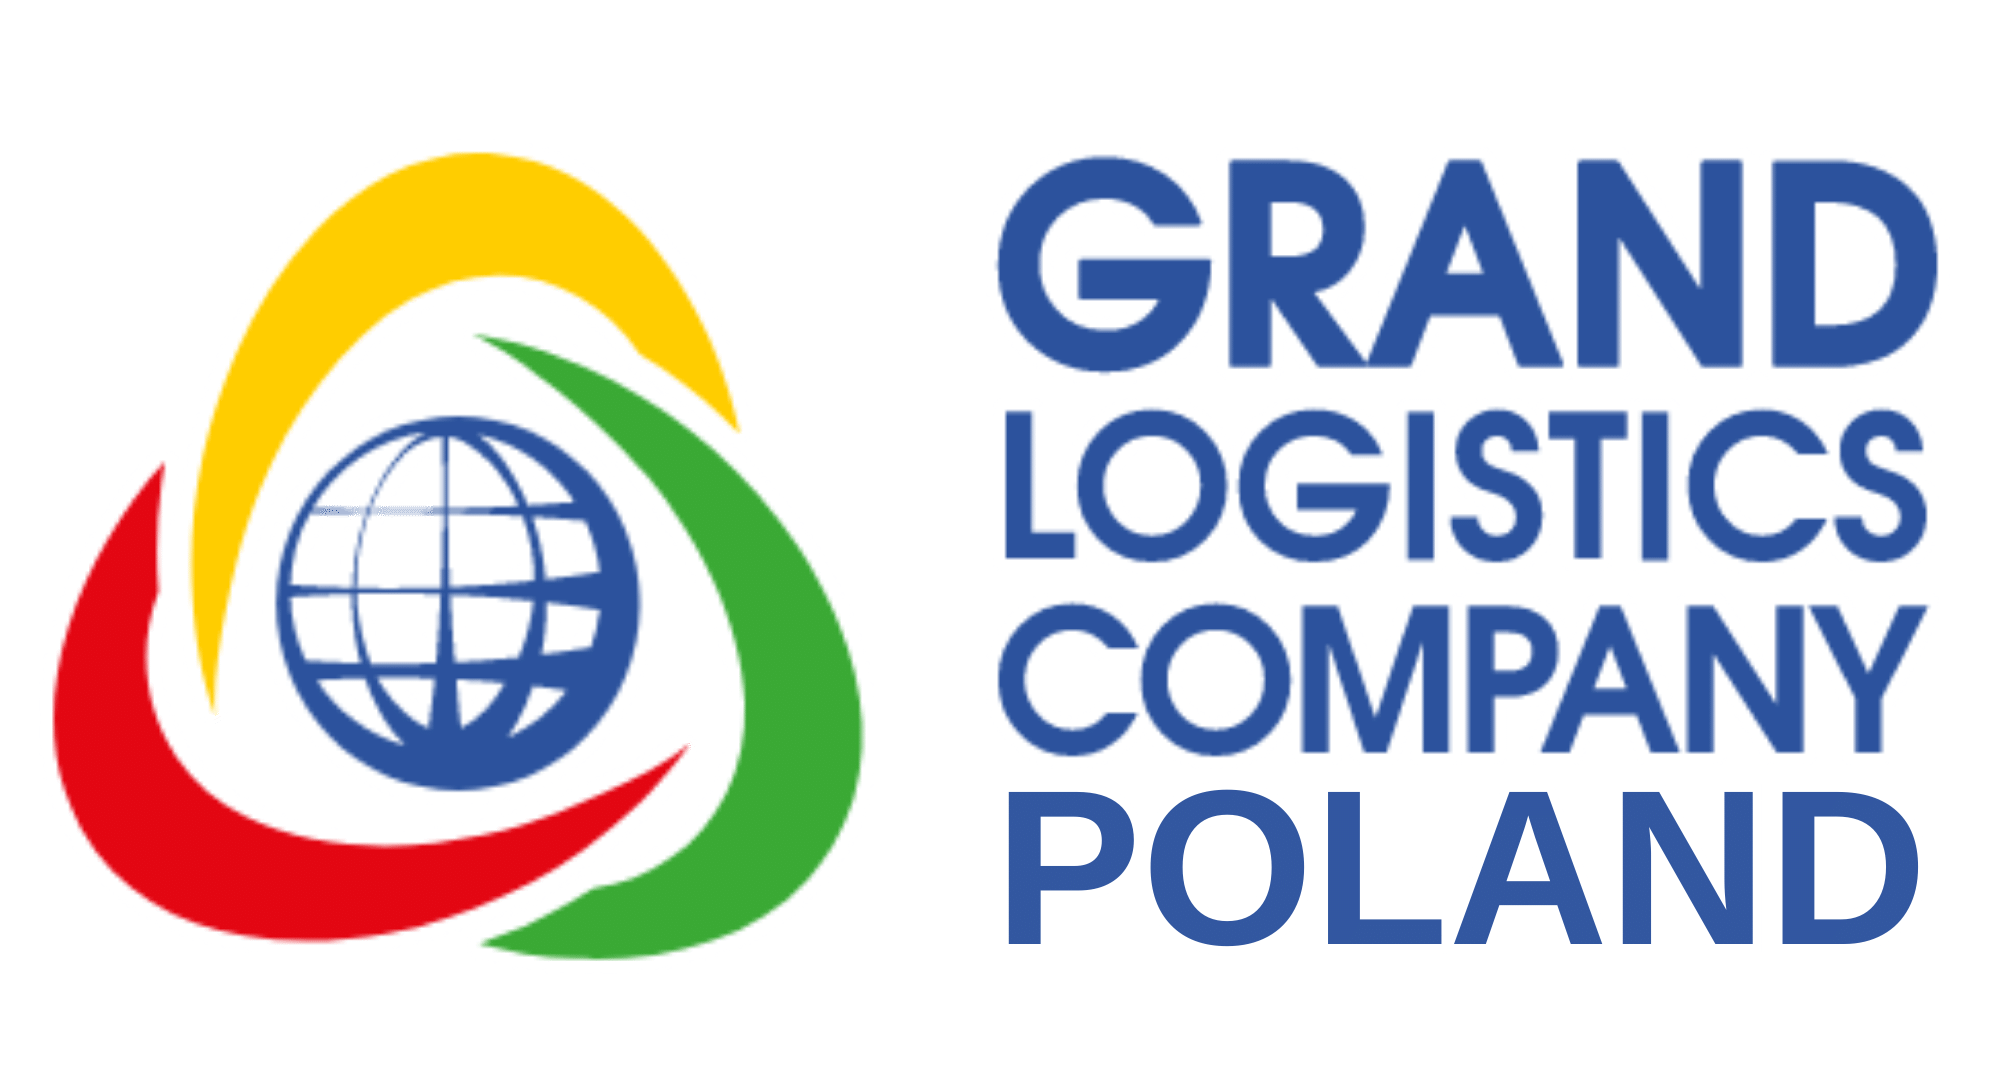 Grand Logistics Company PL